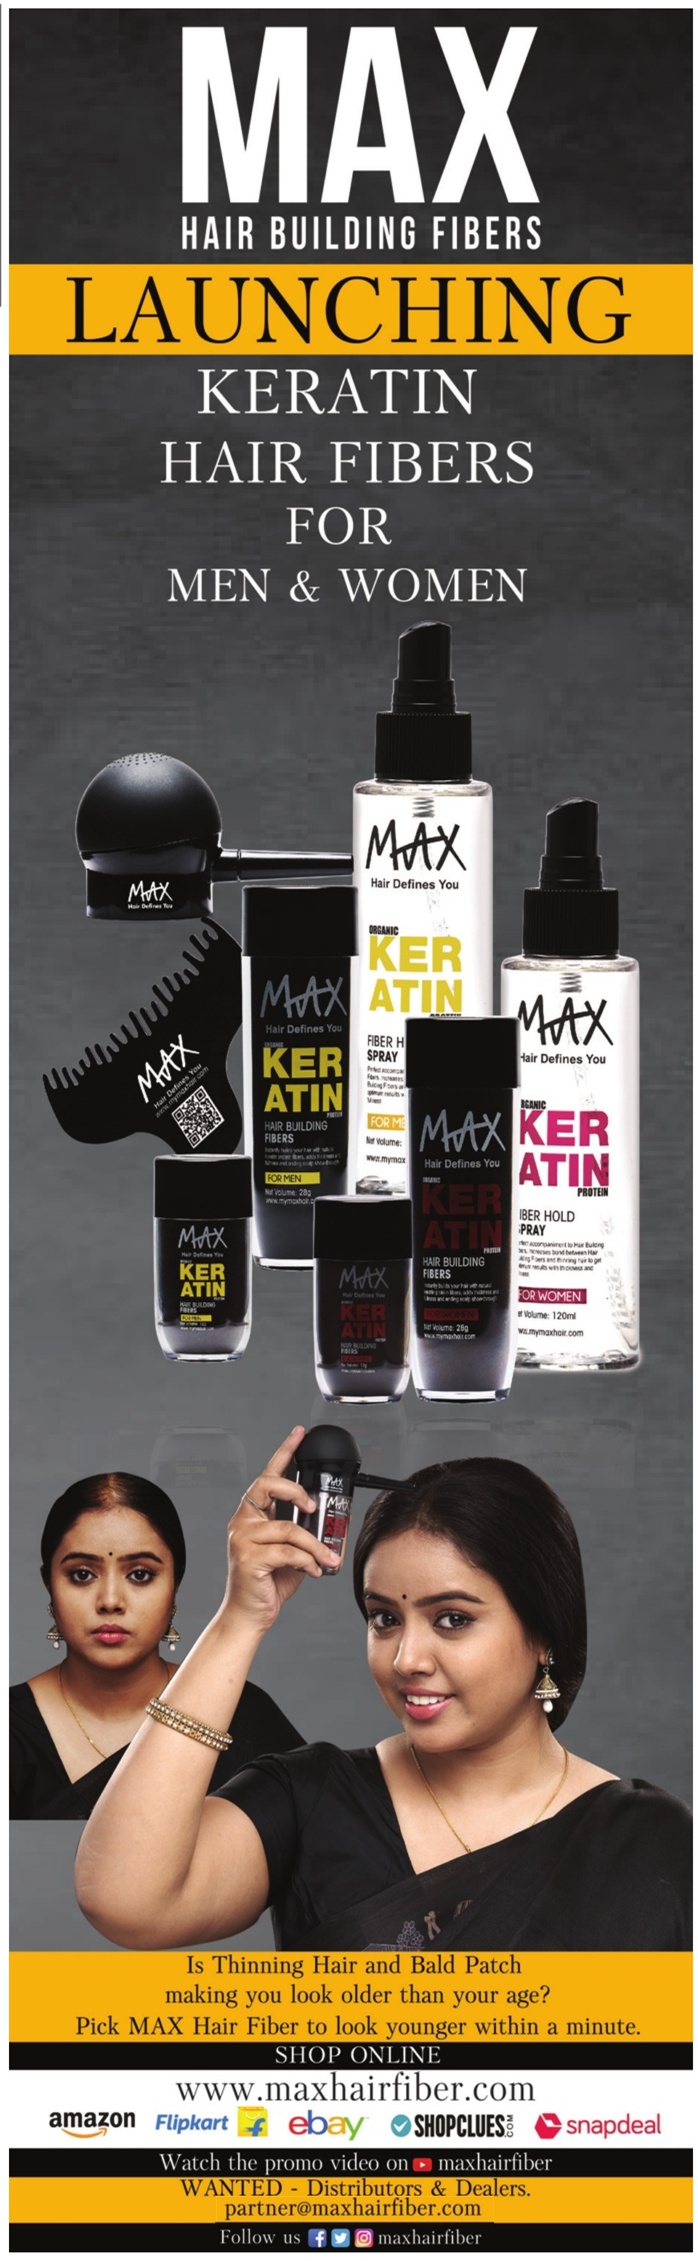 Max Hair Building Fibers Launching Keratin Hair Fibers For Men And Women Ad  - Advert Gallery